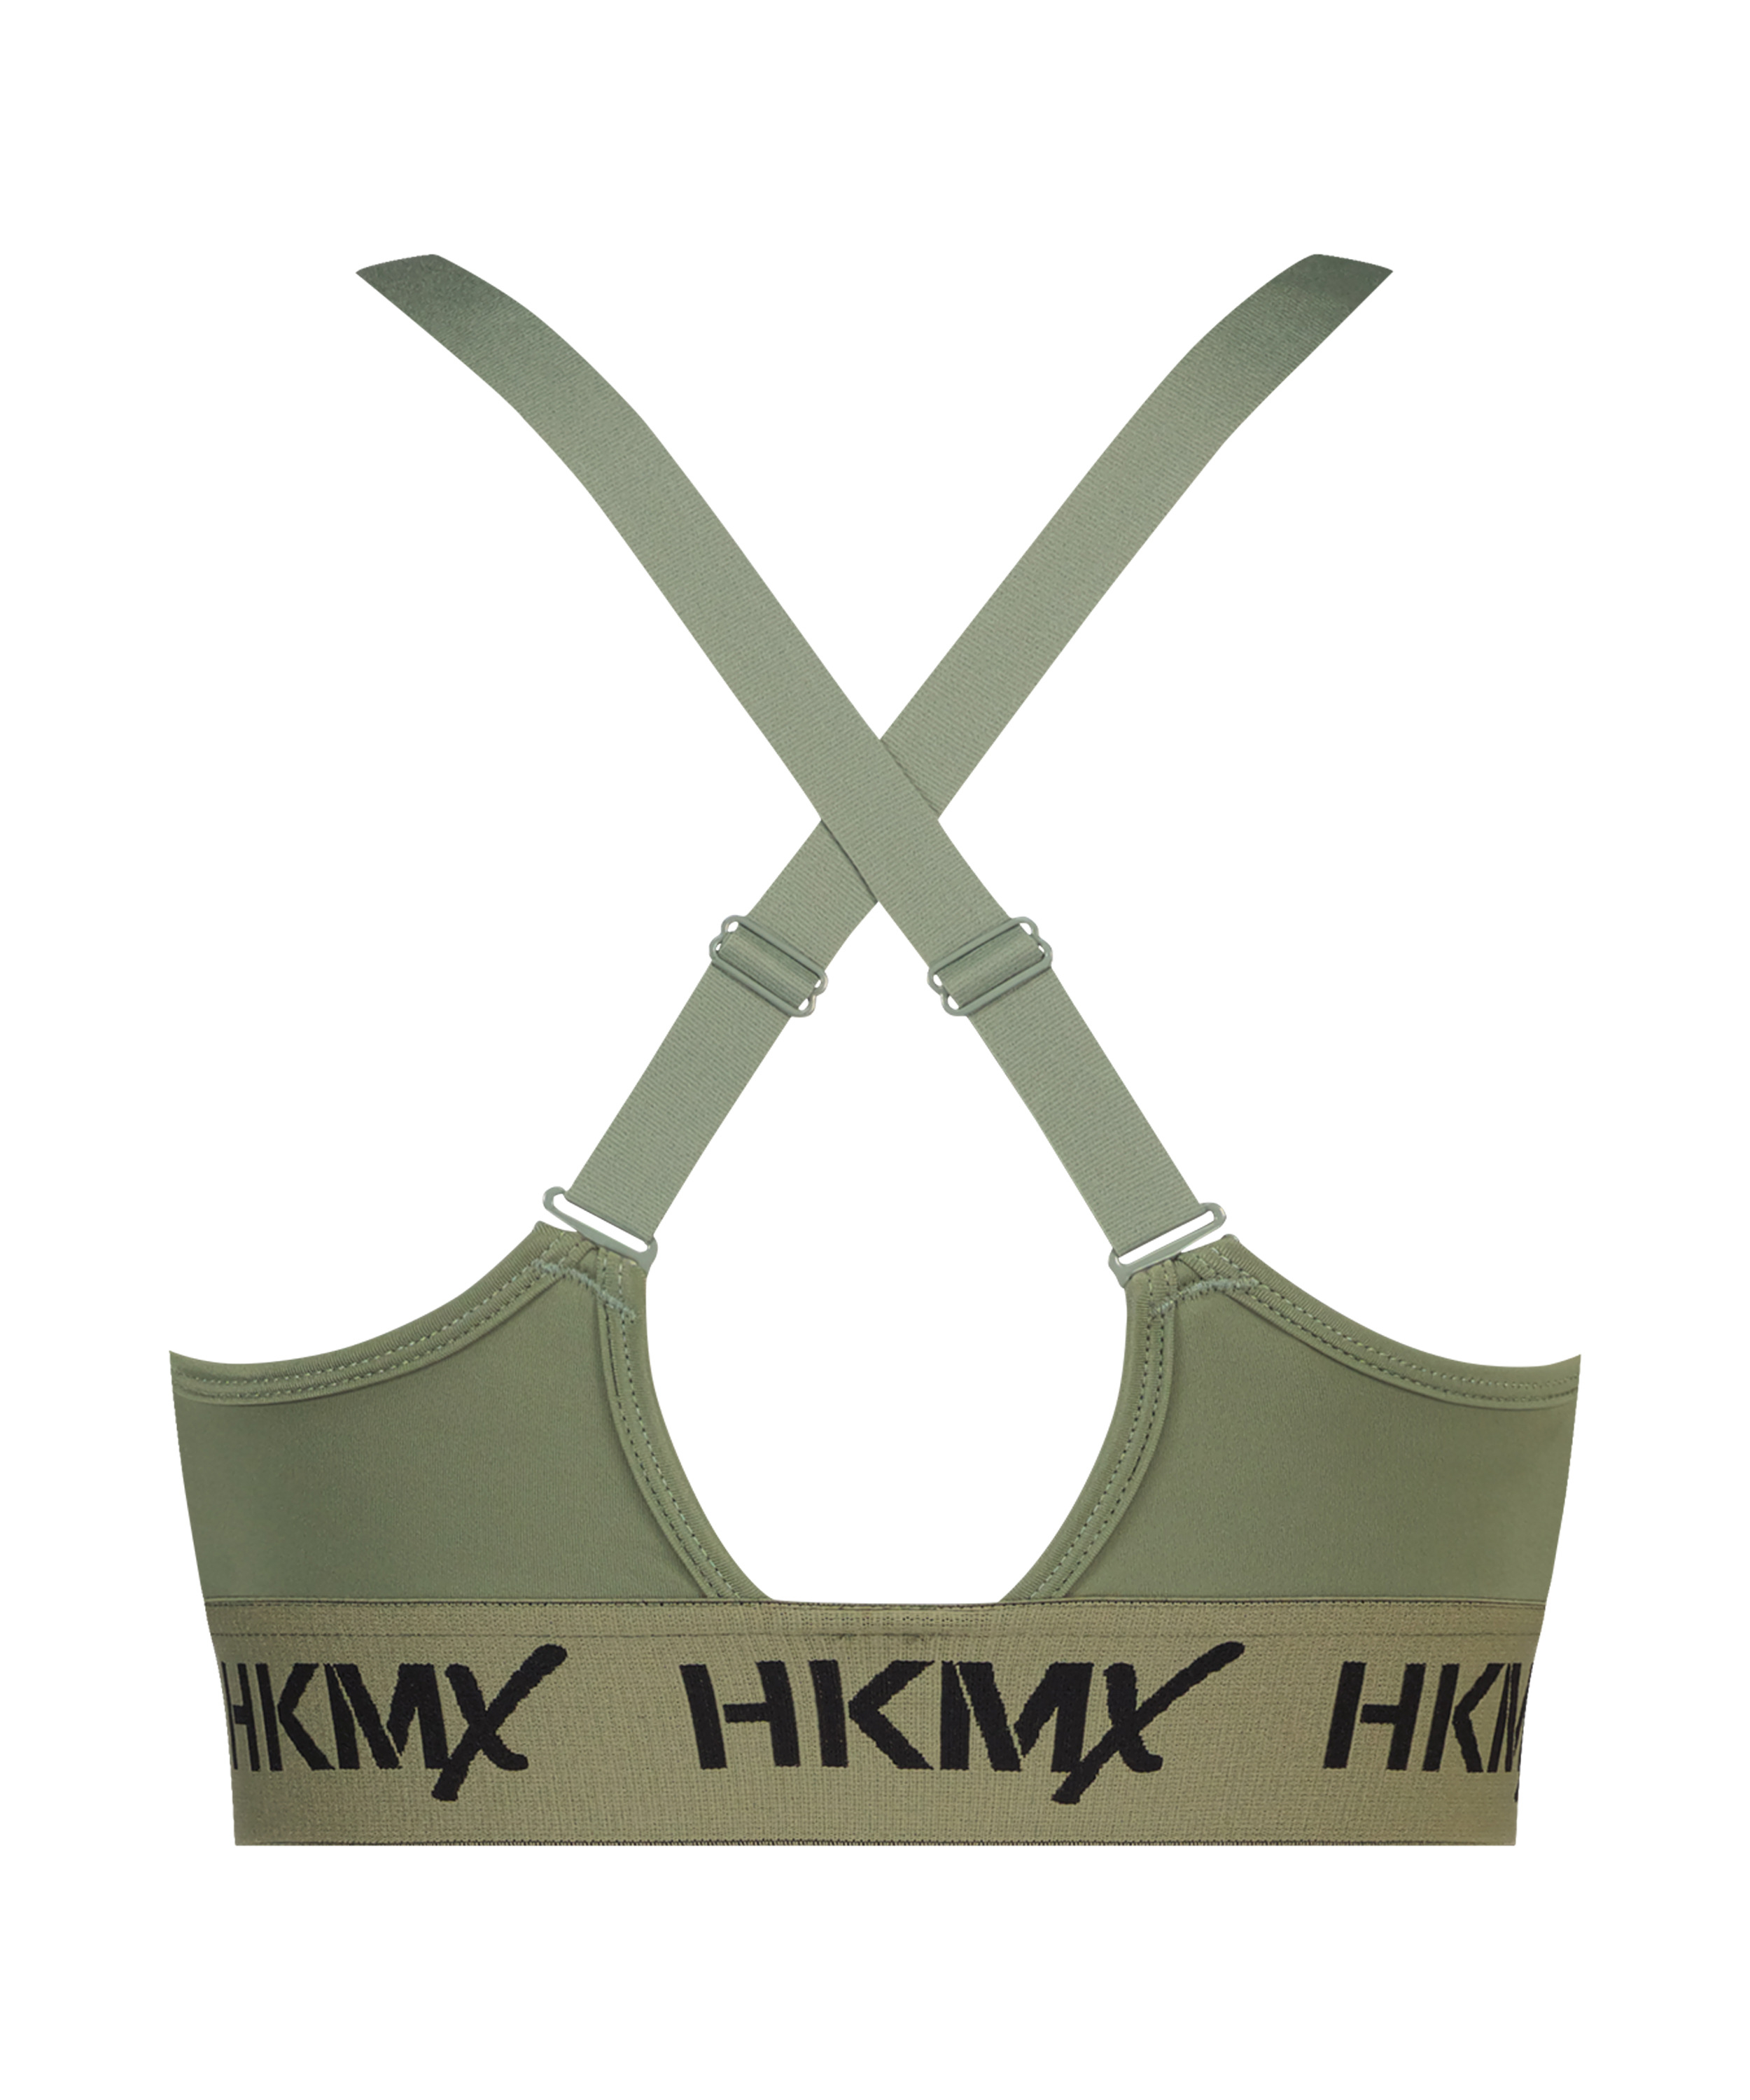 HKMX Sport-BH The Crop Logo Level 1, grün, main